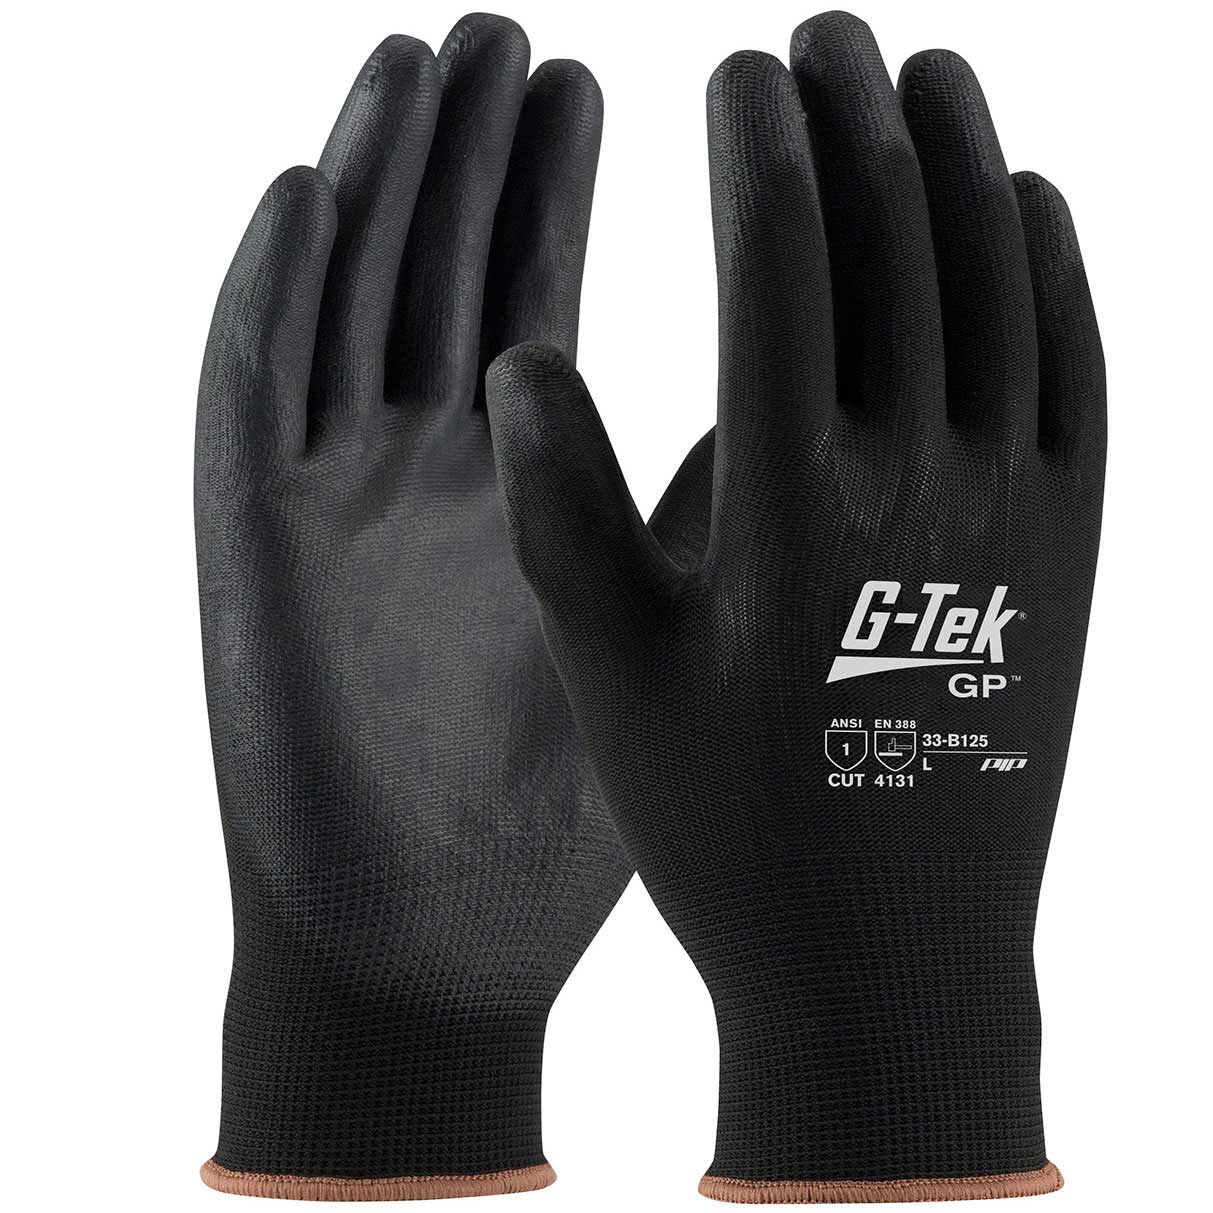 PIP G Tek GP Seamless Knit Nylon Glove